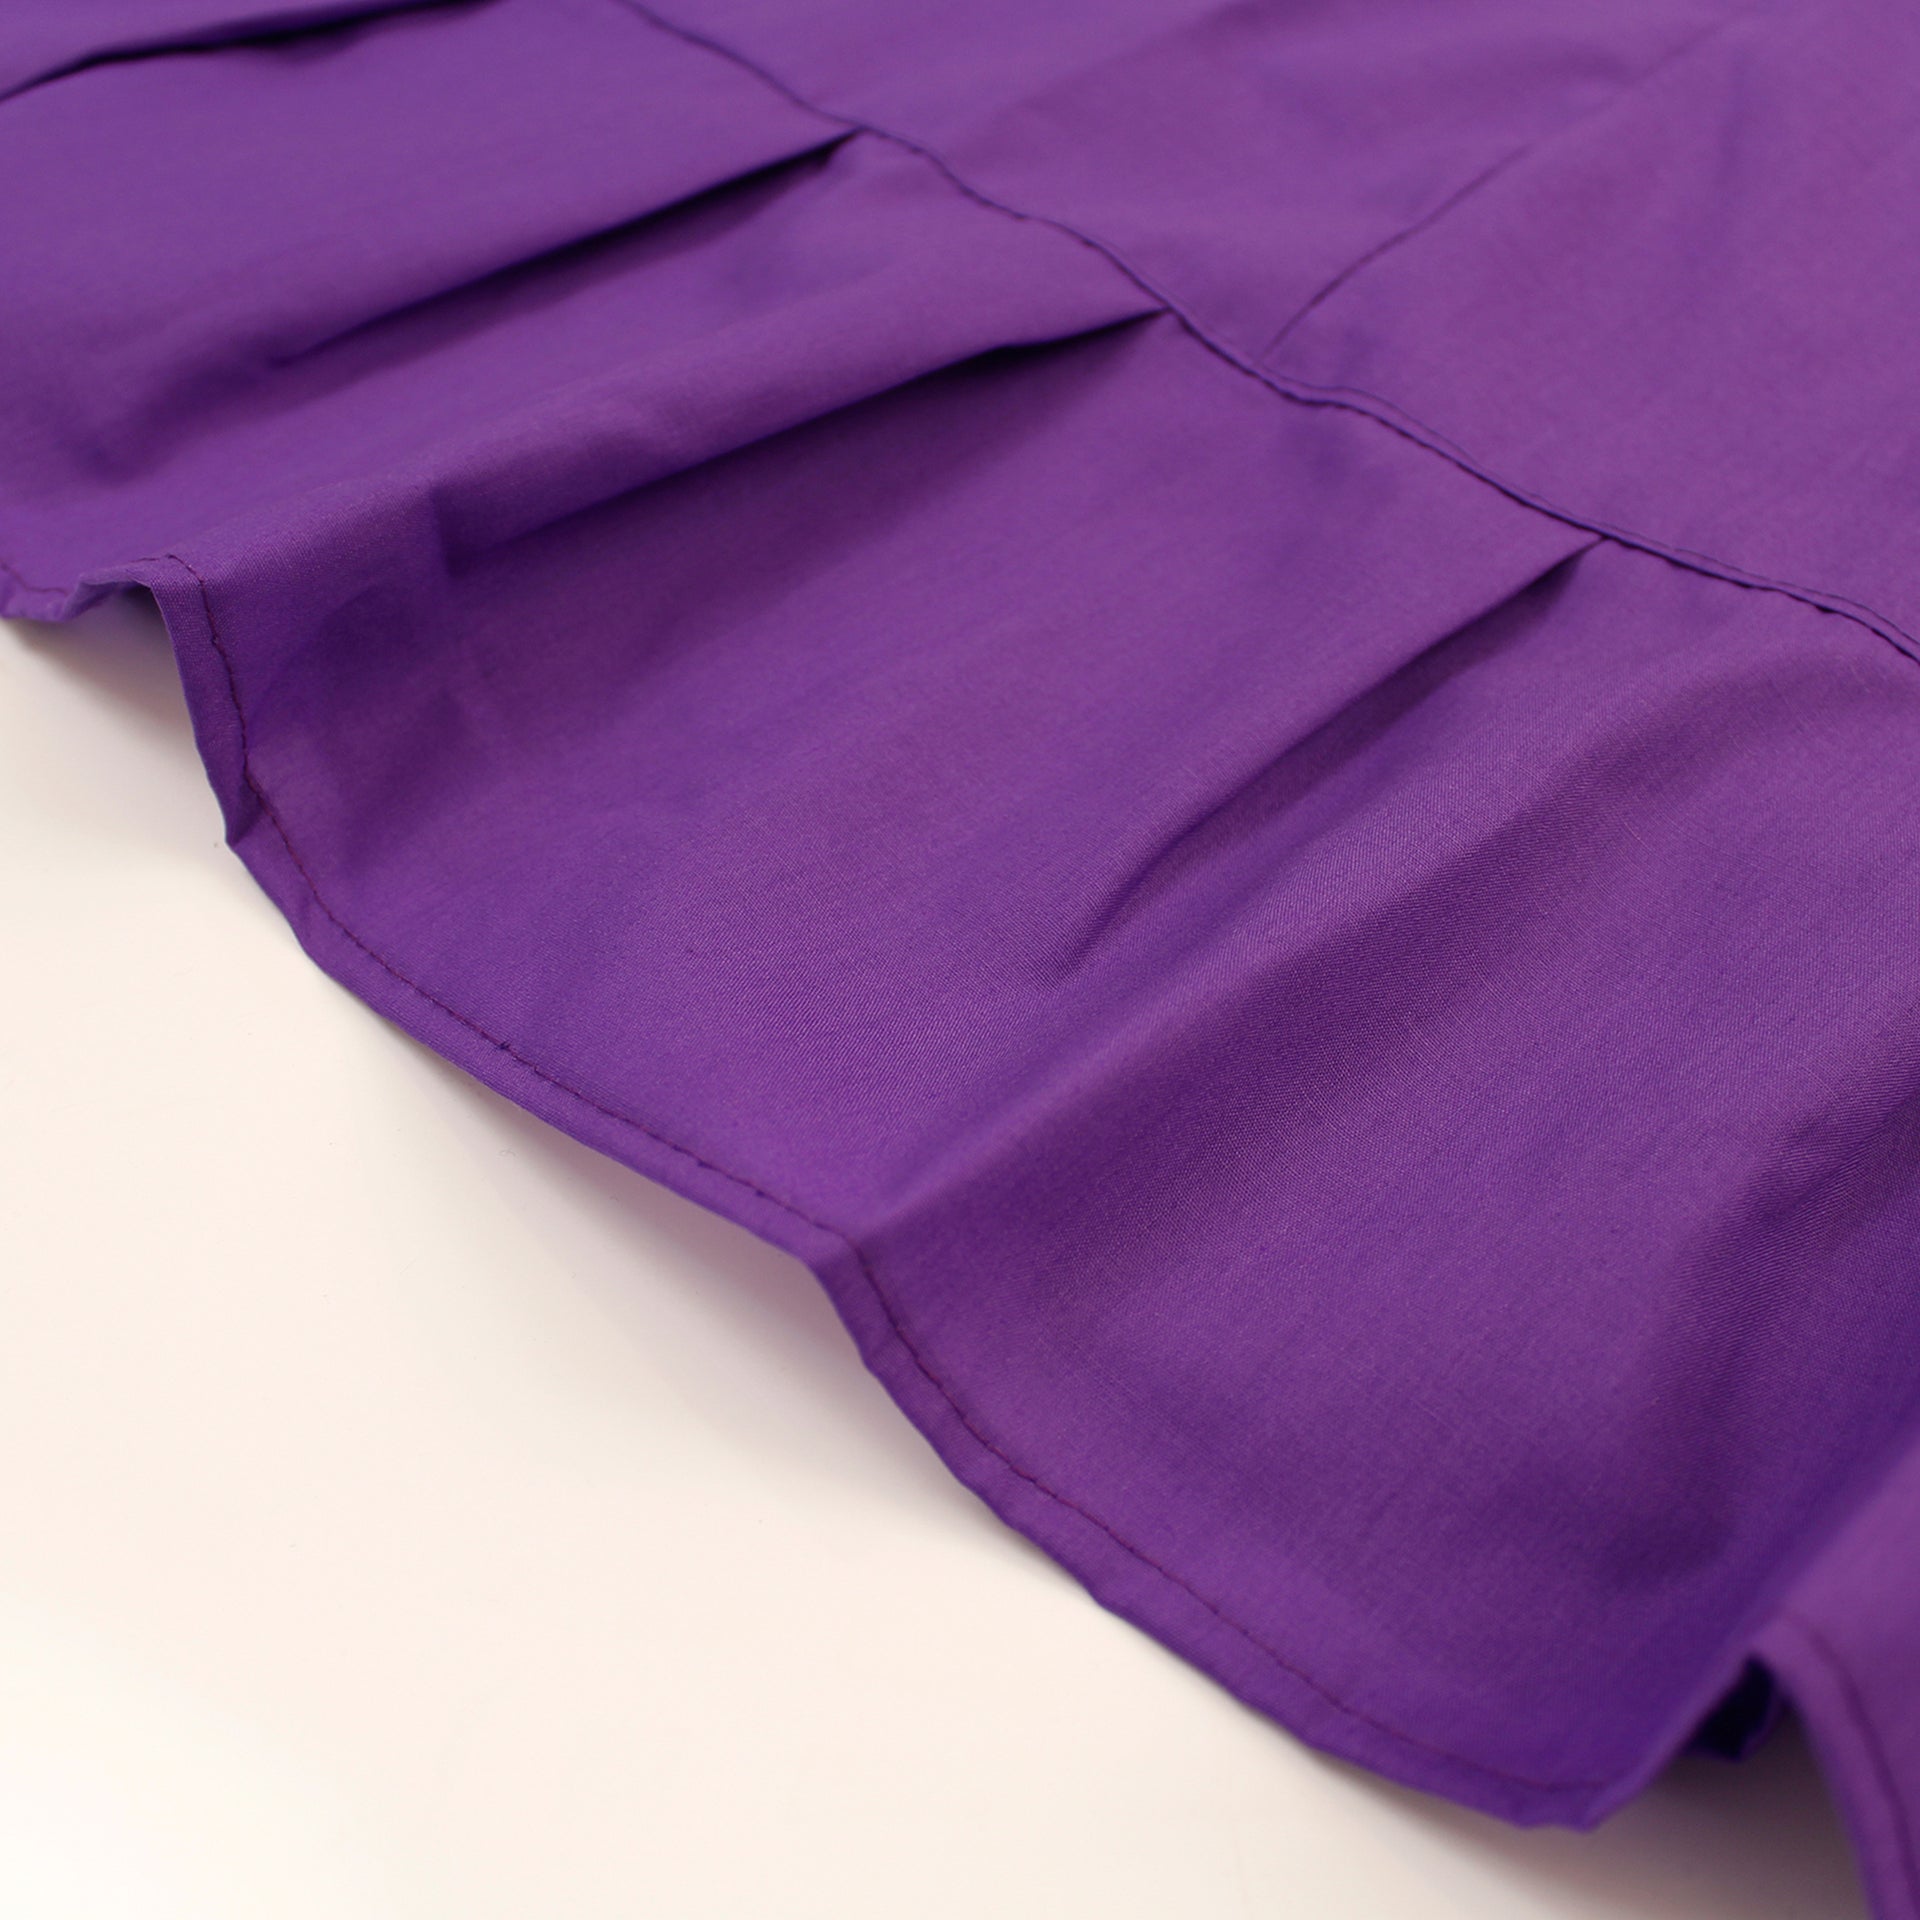 Purple - Sari (Saree) Petticoat - Available in S, M, L & XL - Underski